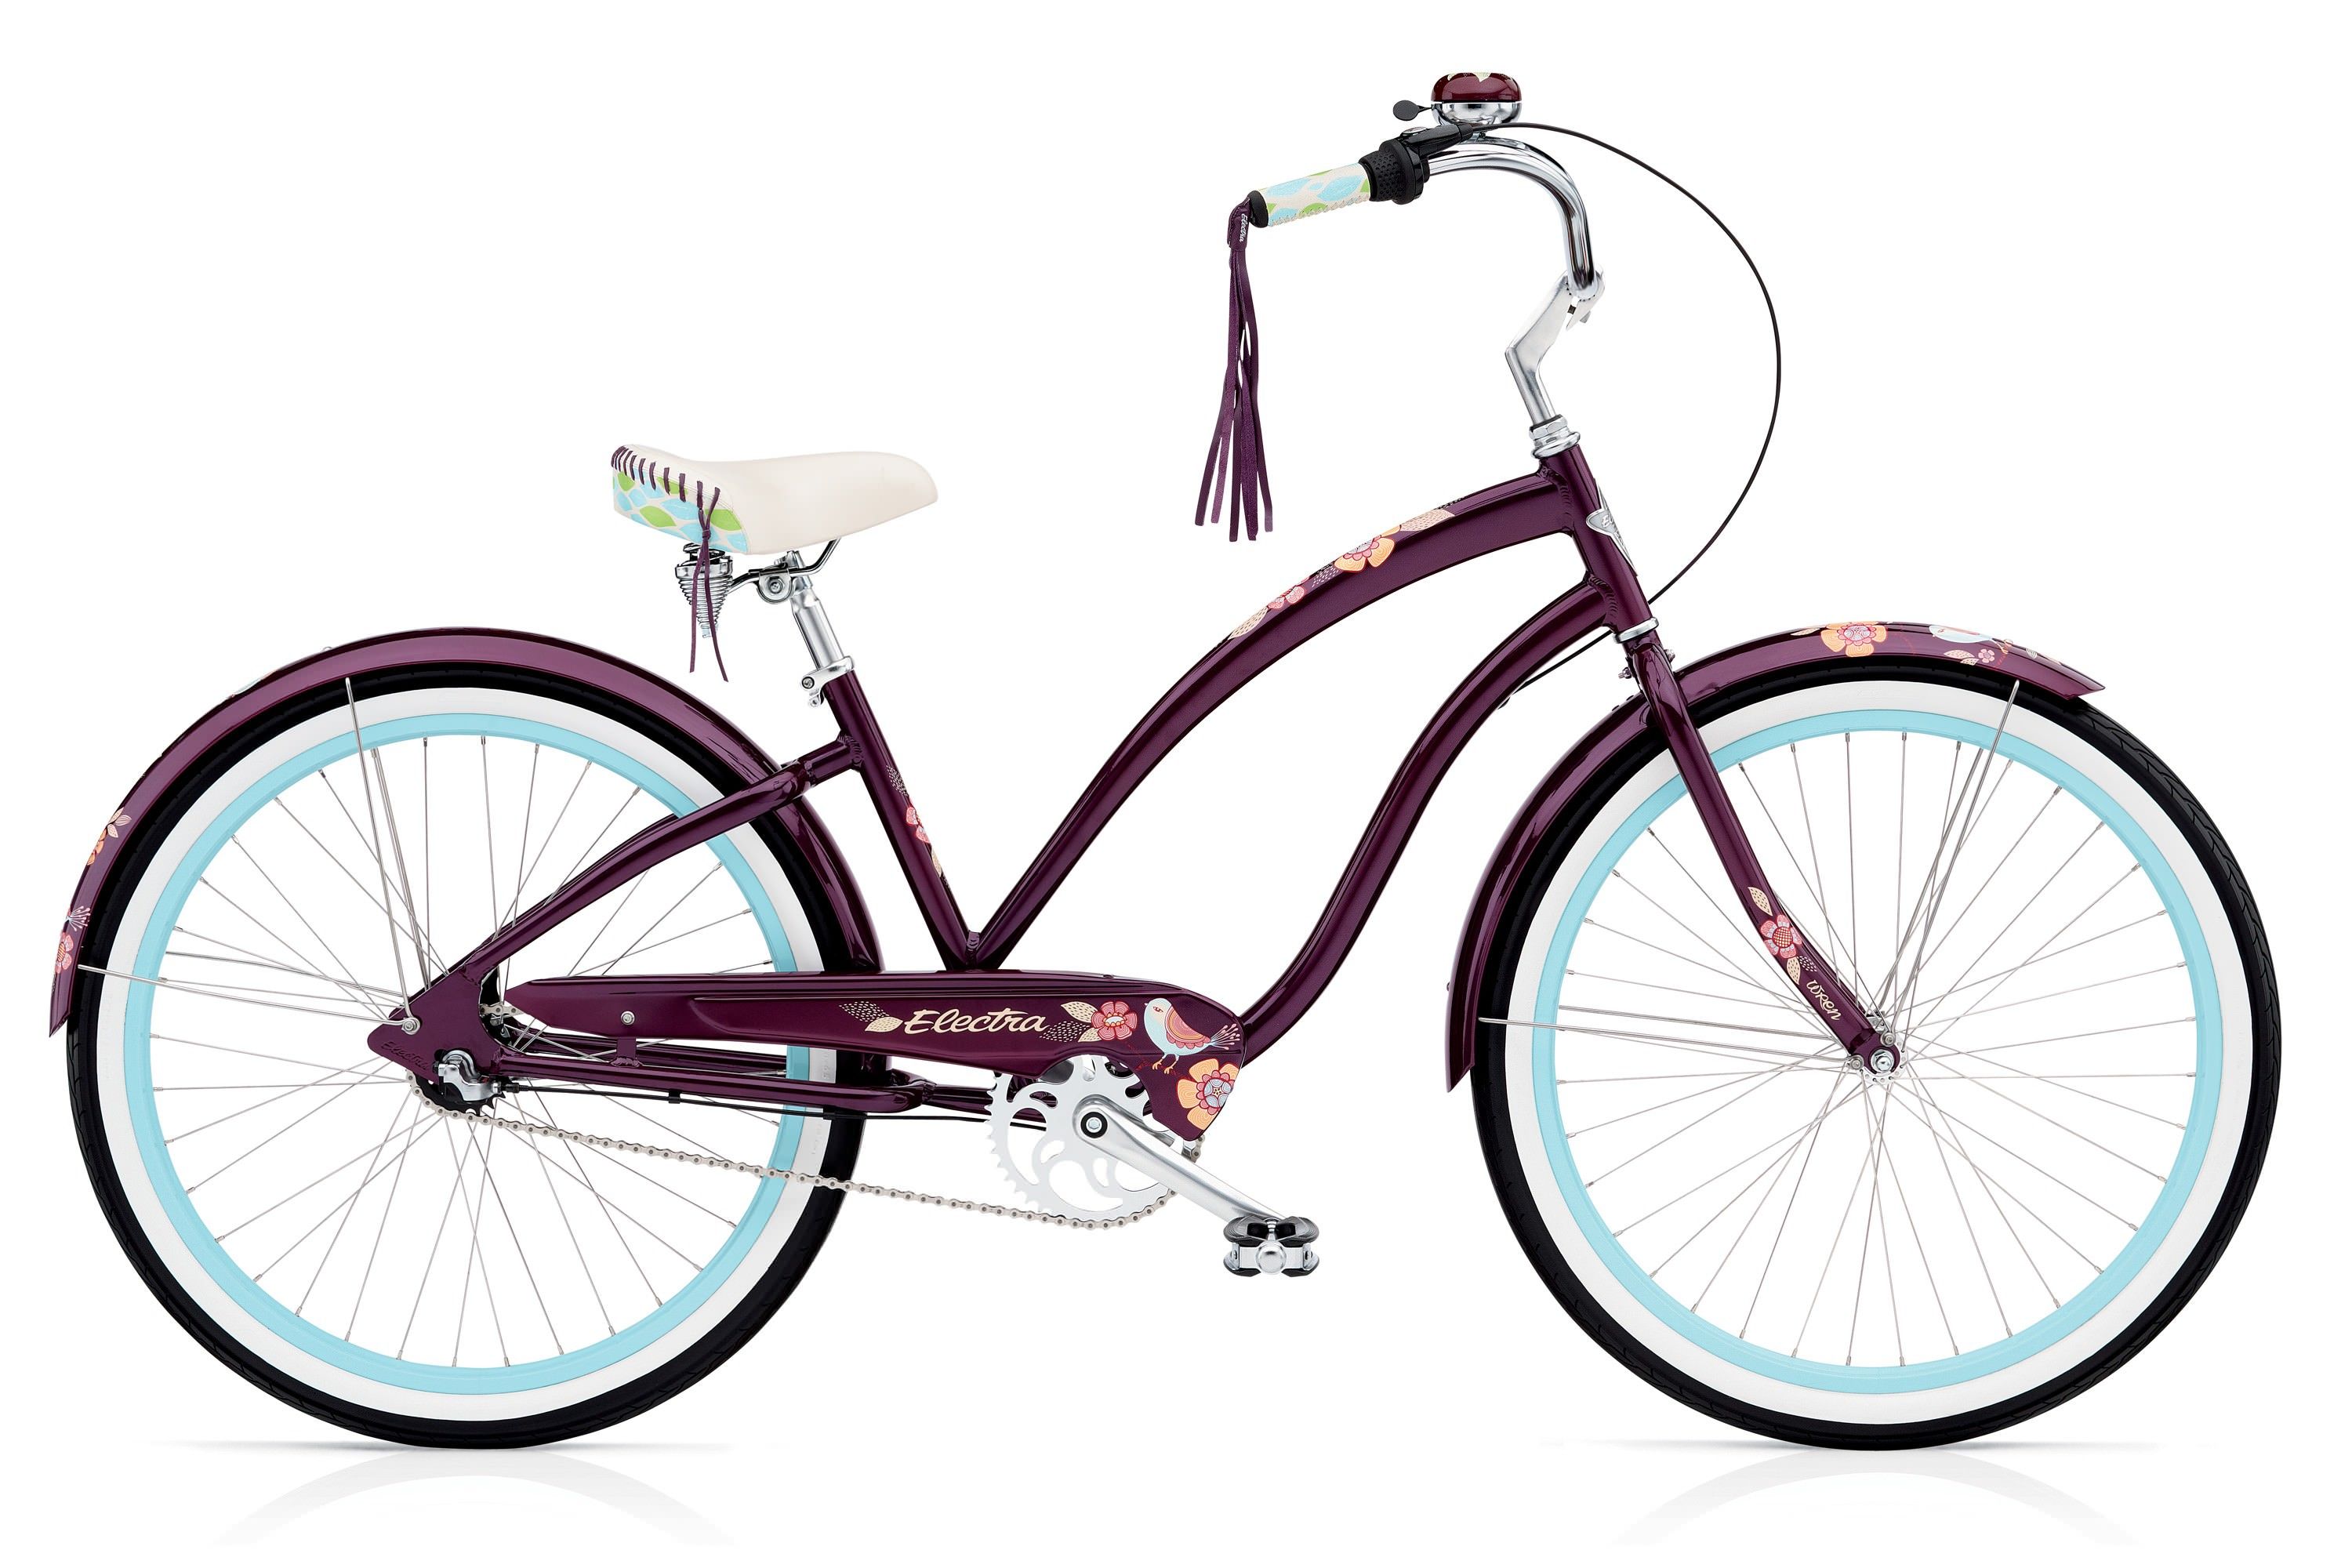  Отзывы о Женском велосипеде Electra Cruiser Wren 3i Ladies 2017